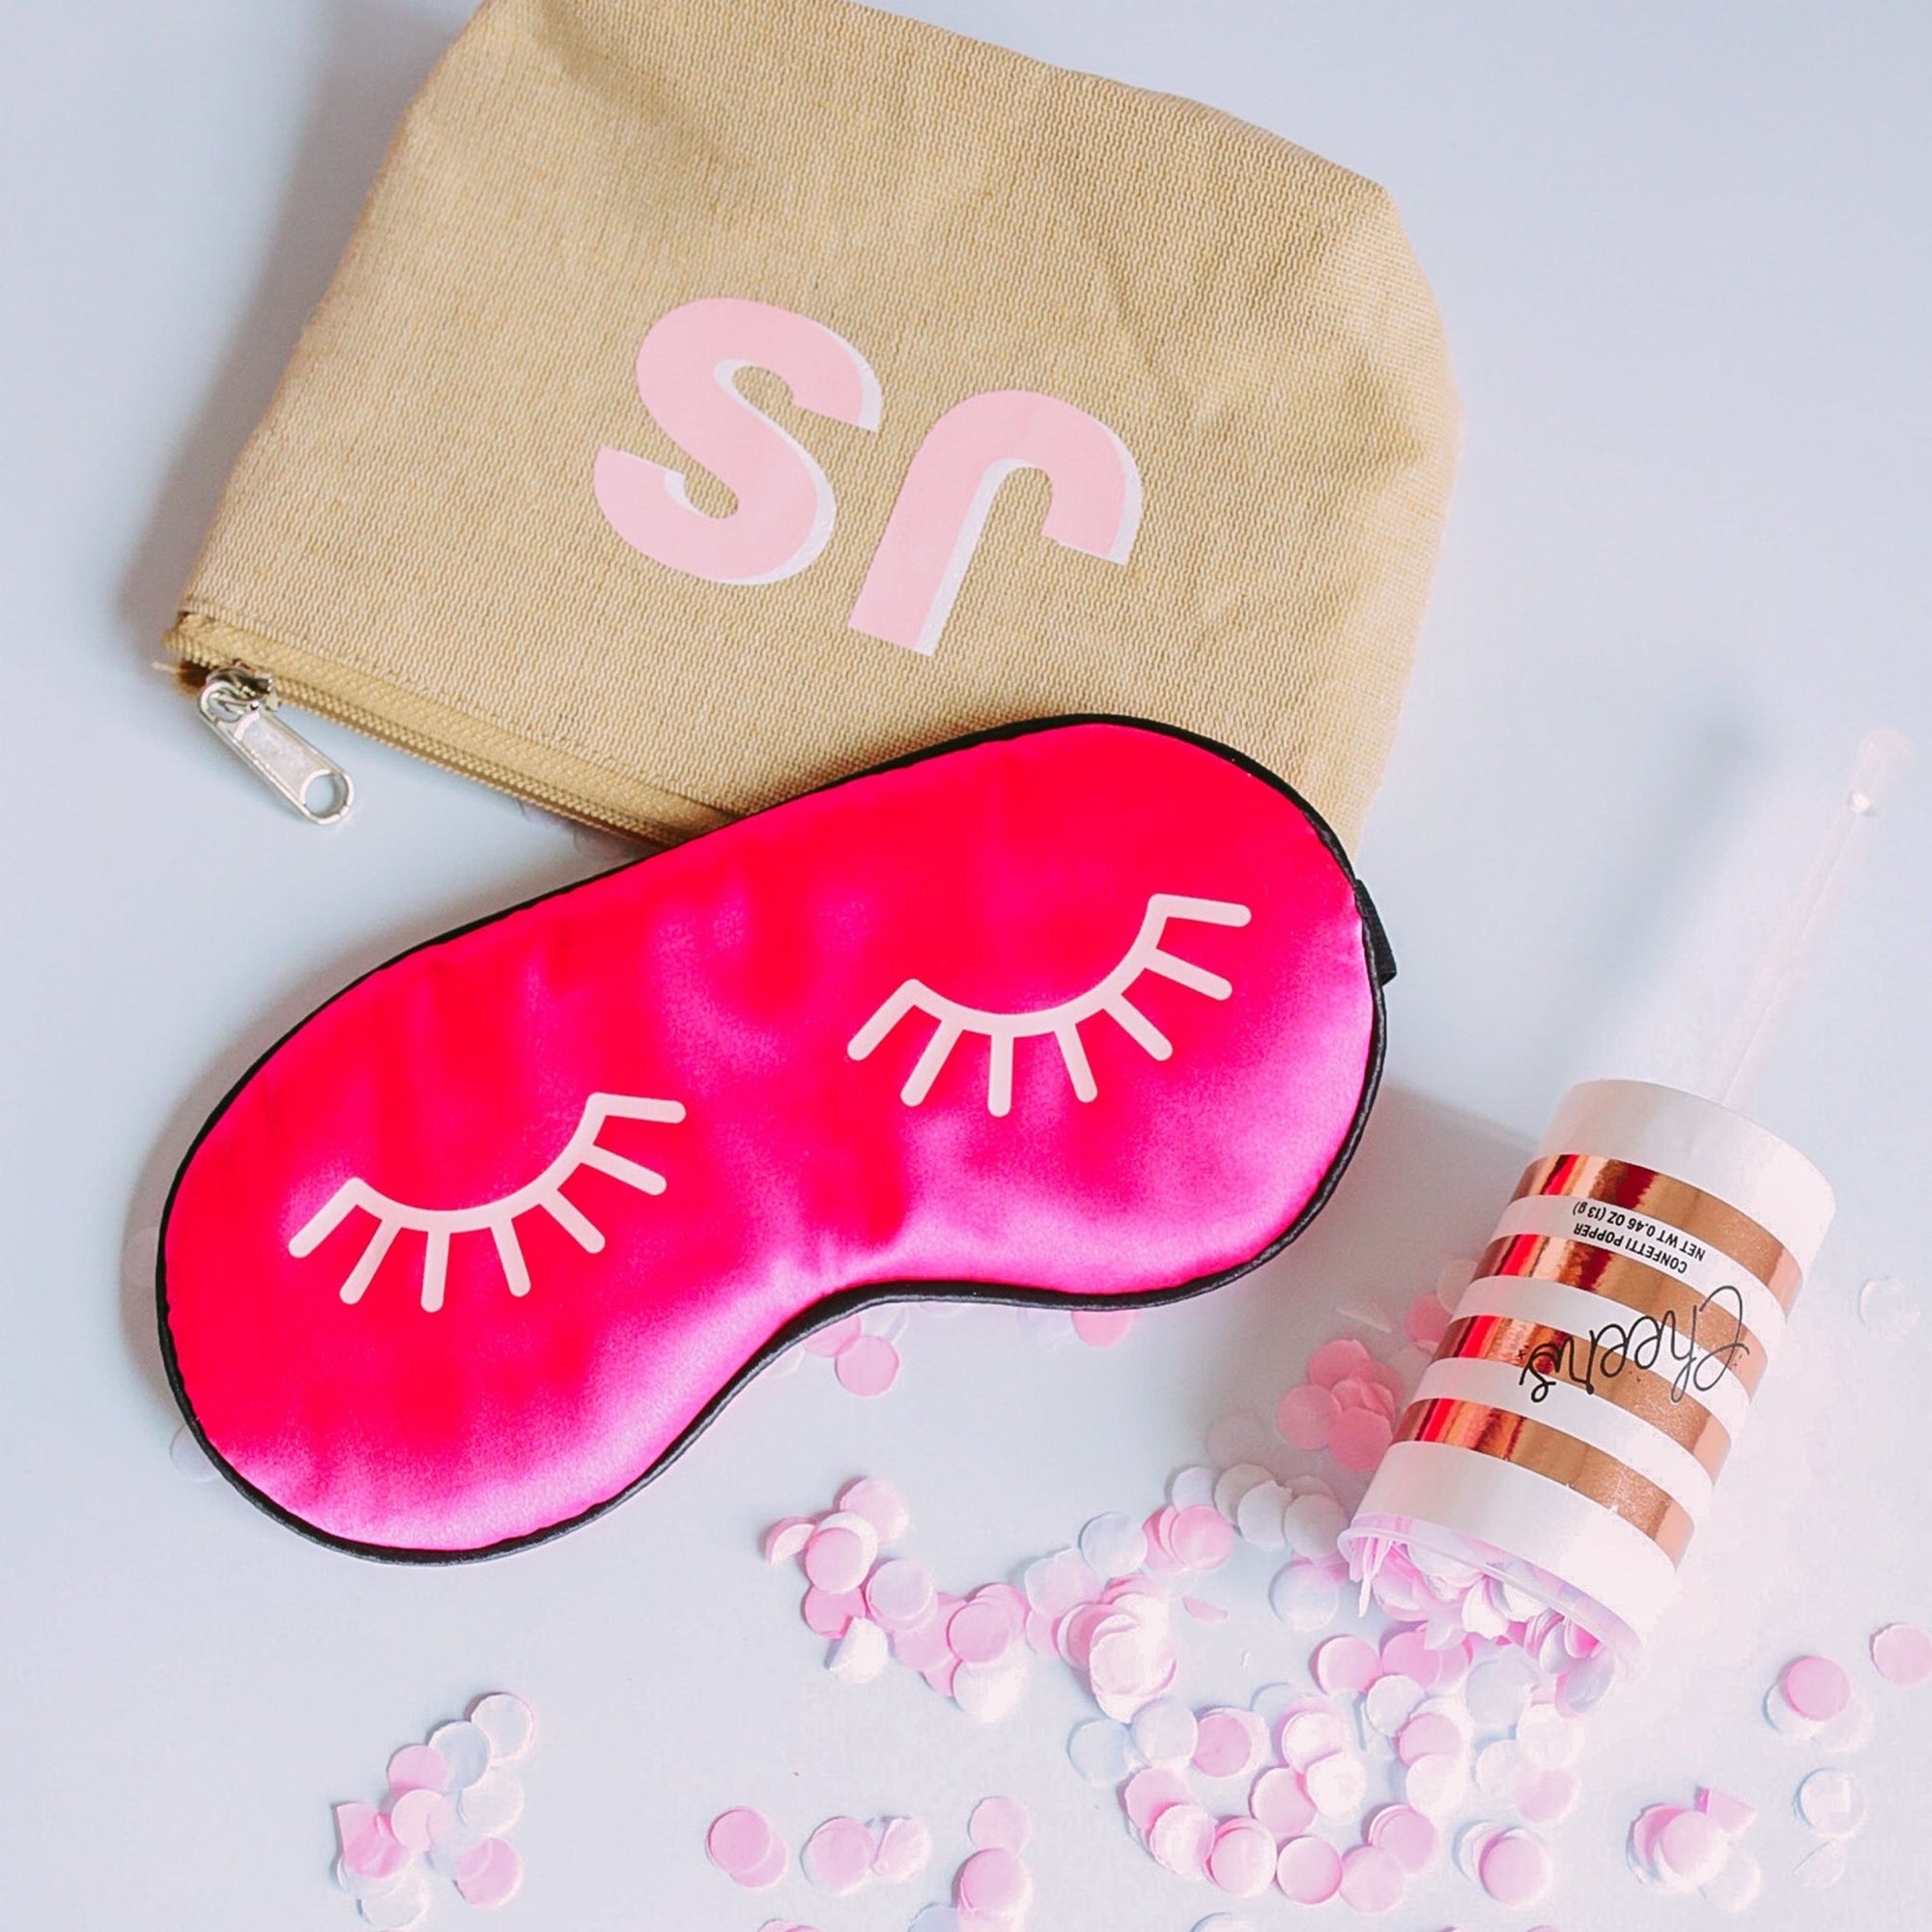 A sleep mask with a pink eyelash design.